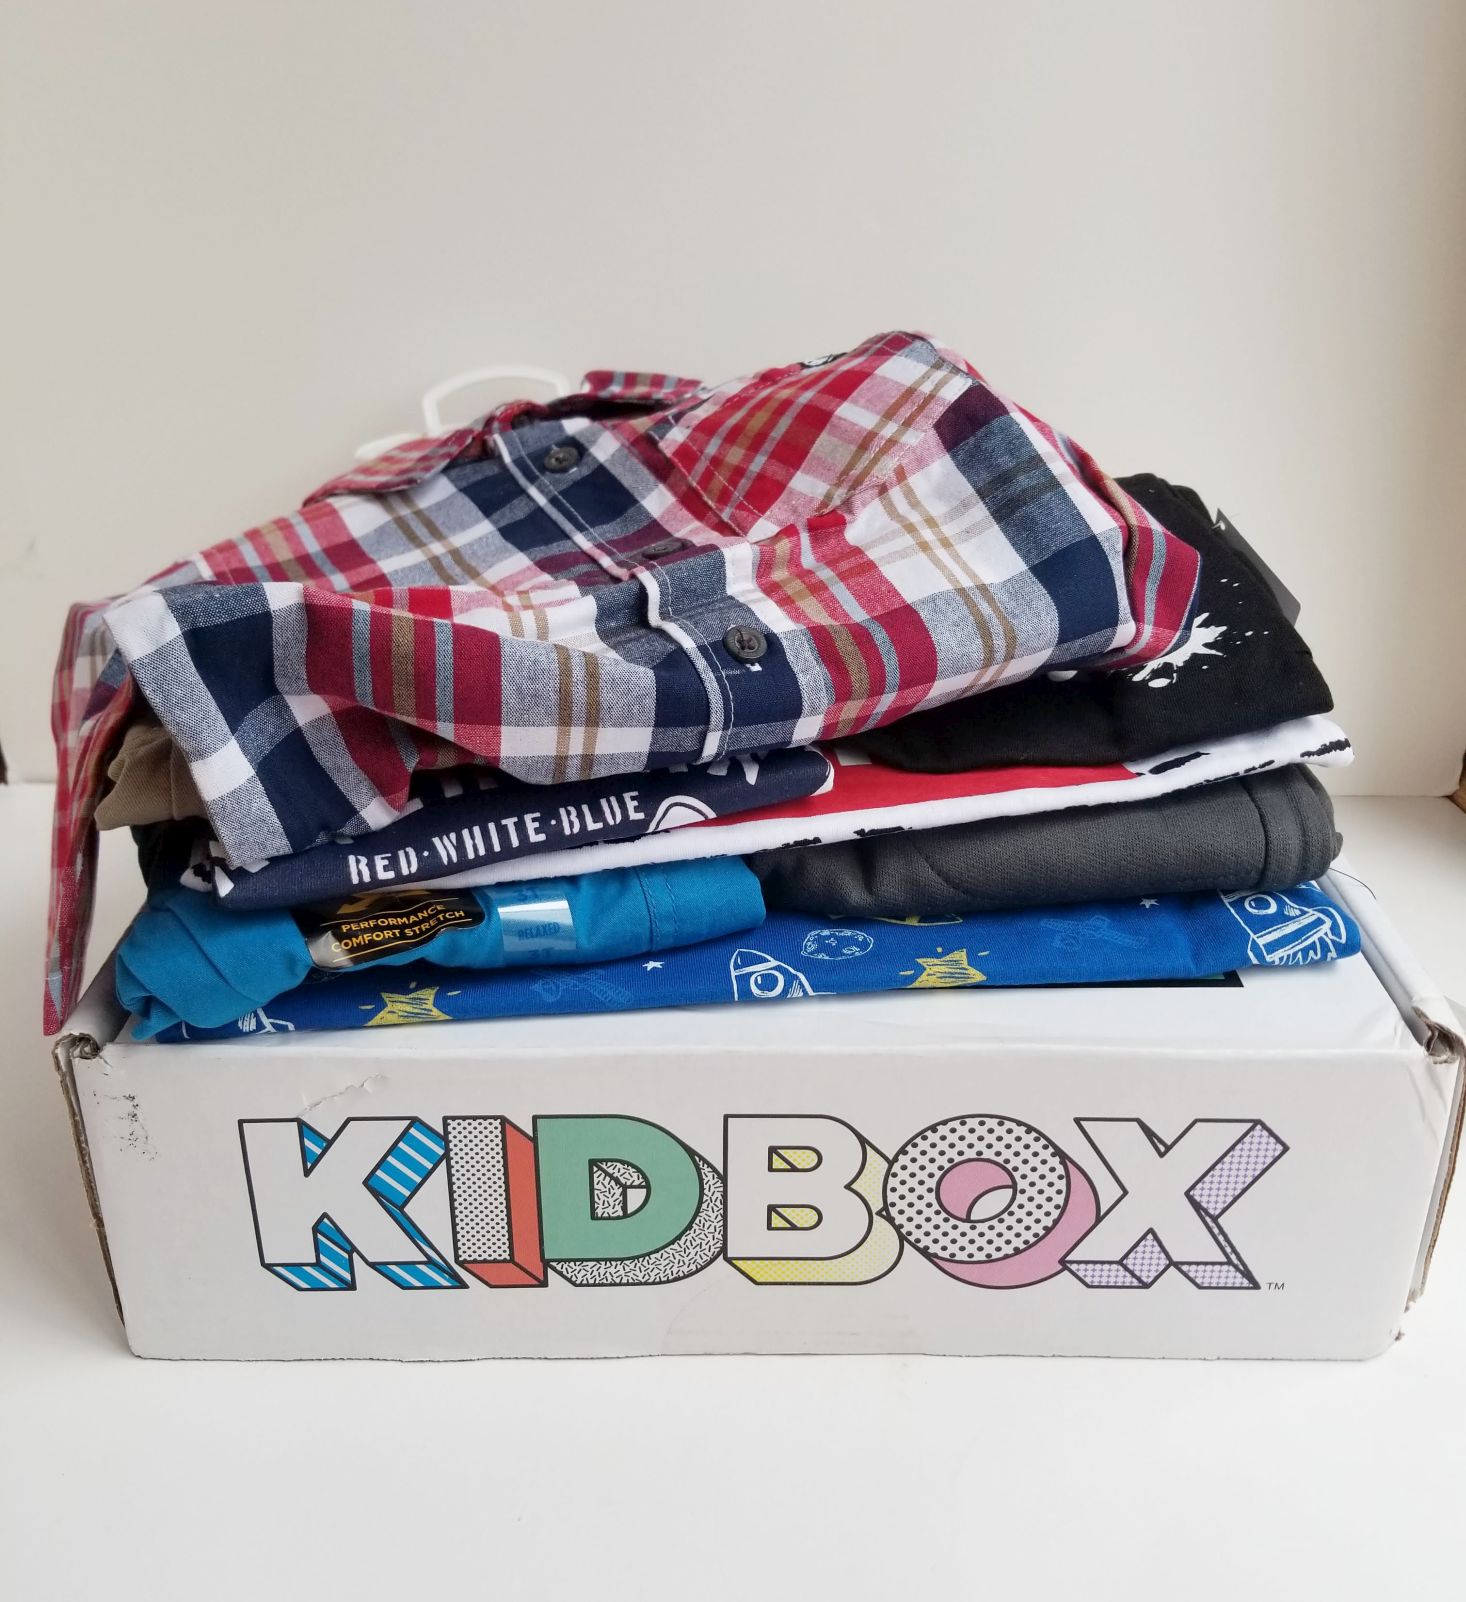 Kidbox Clothing Subscription Review + Coupon – Summer 2018